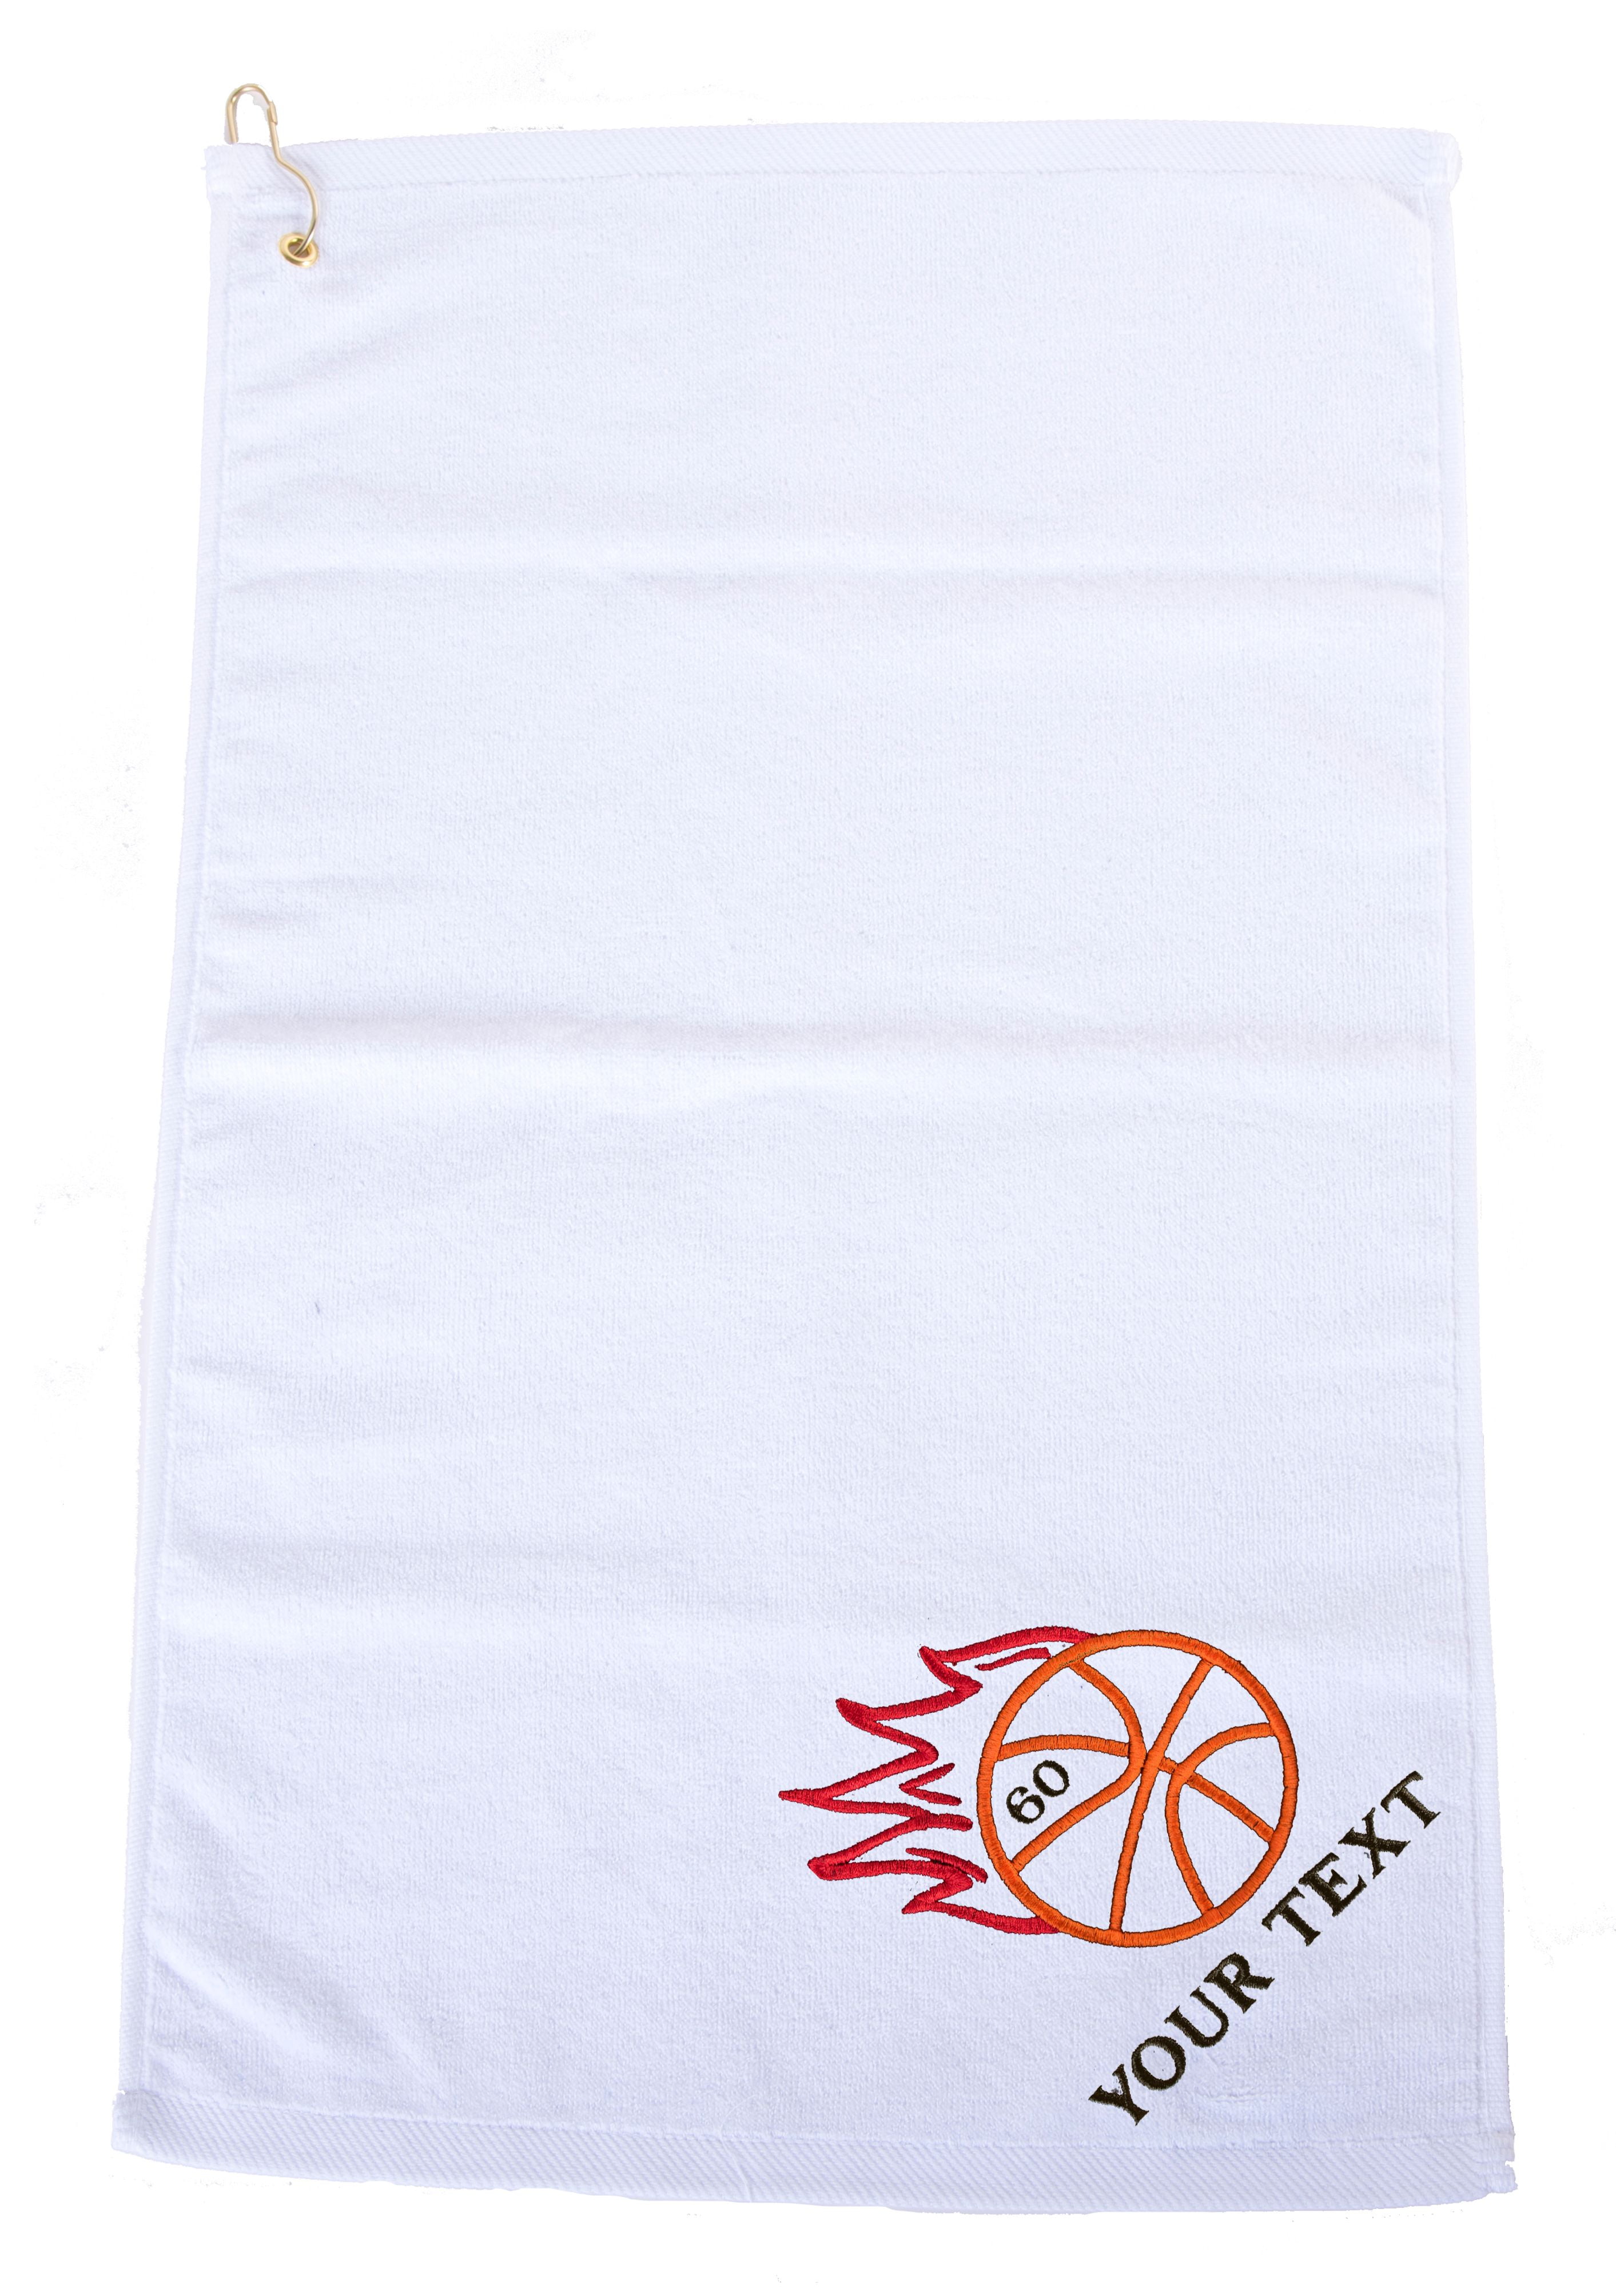 Printed Gym & Sports Towels, Soccer Club Towels